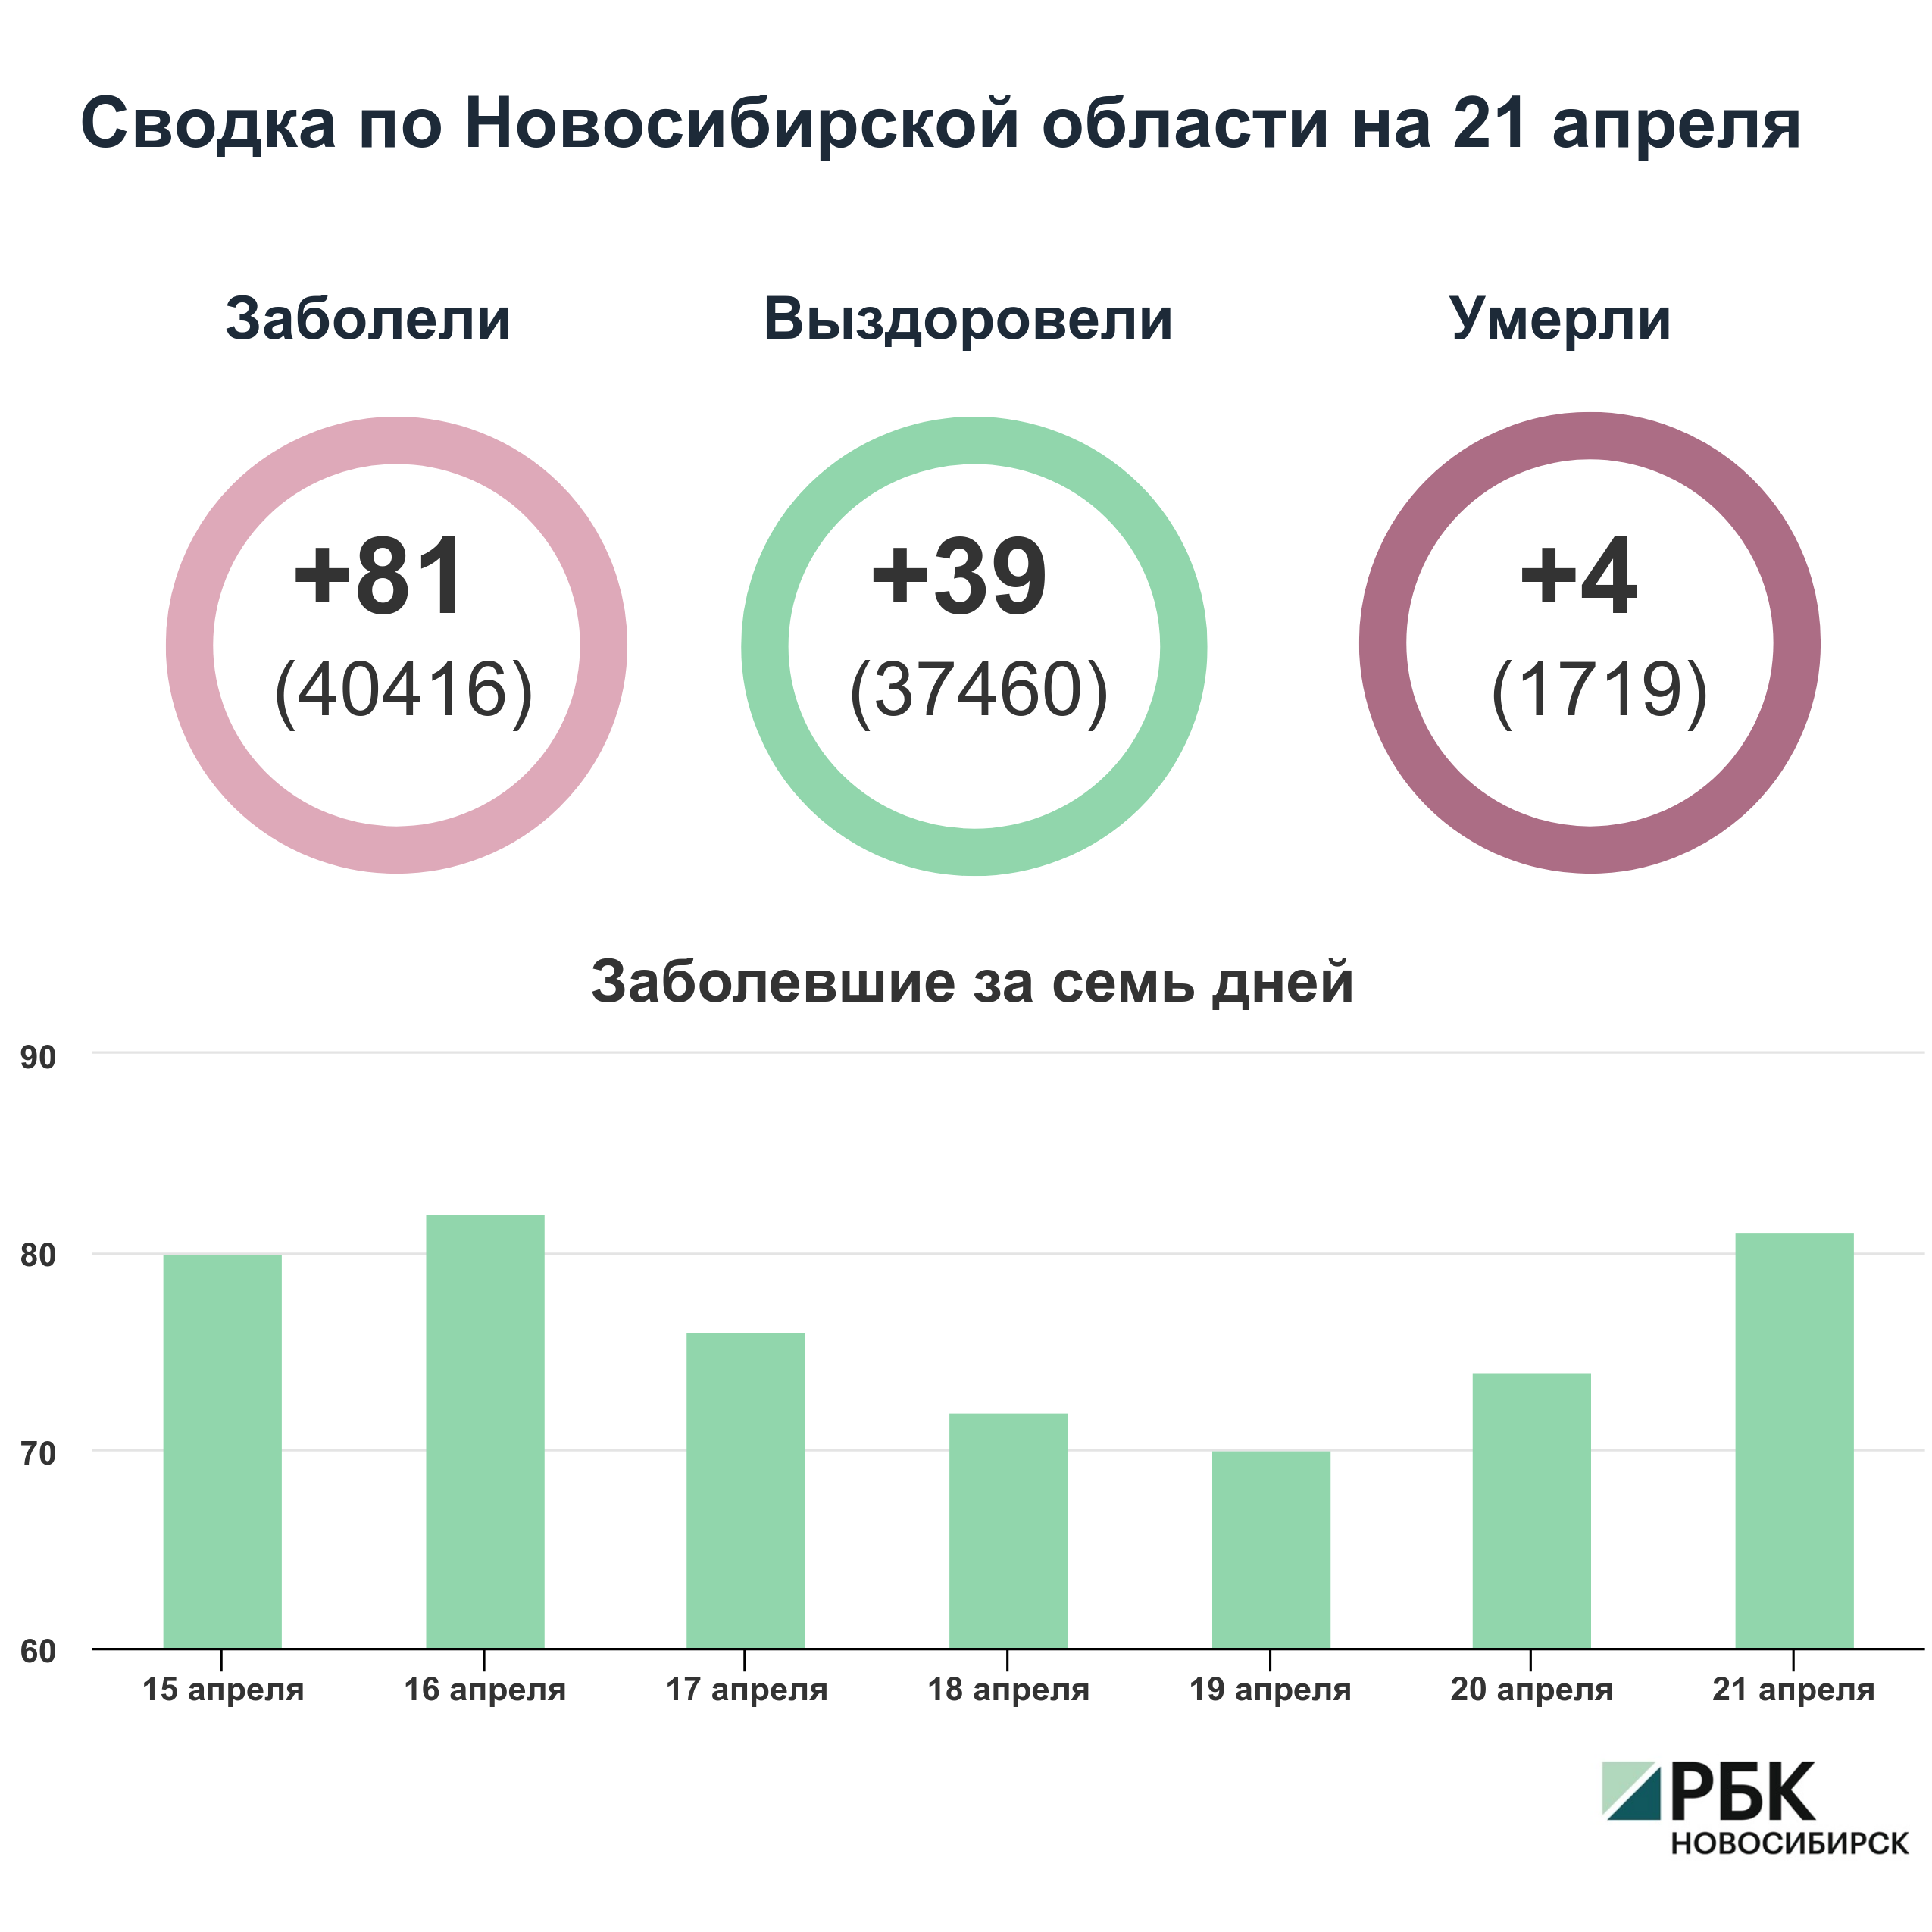 Коронавирус в Новосибирске: сводка на 21 апреля